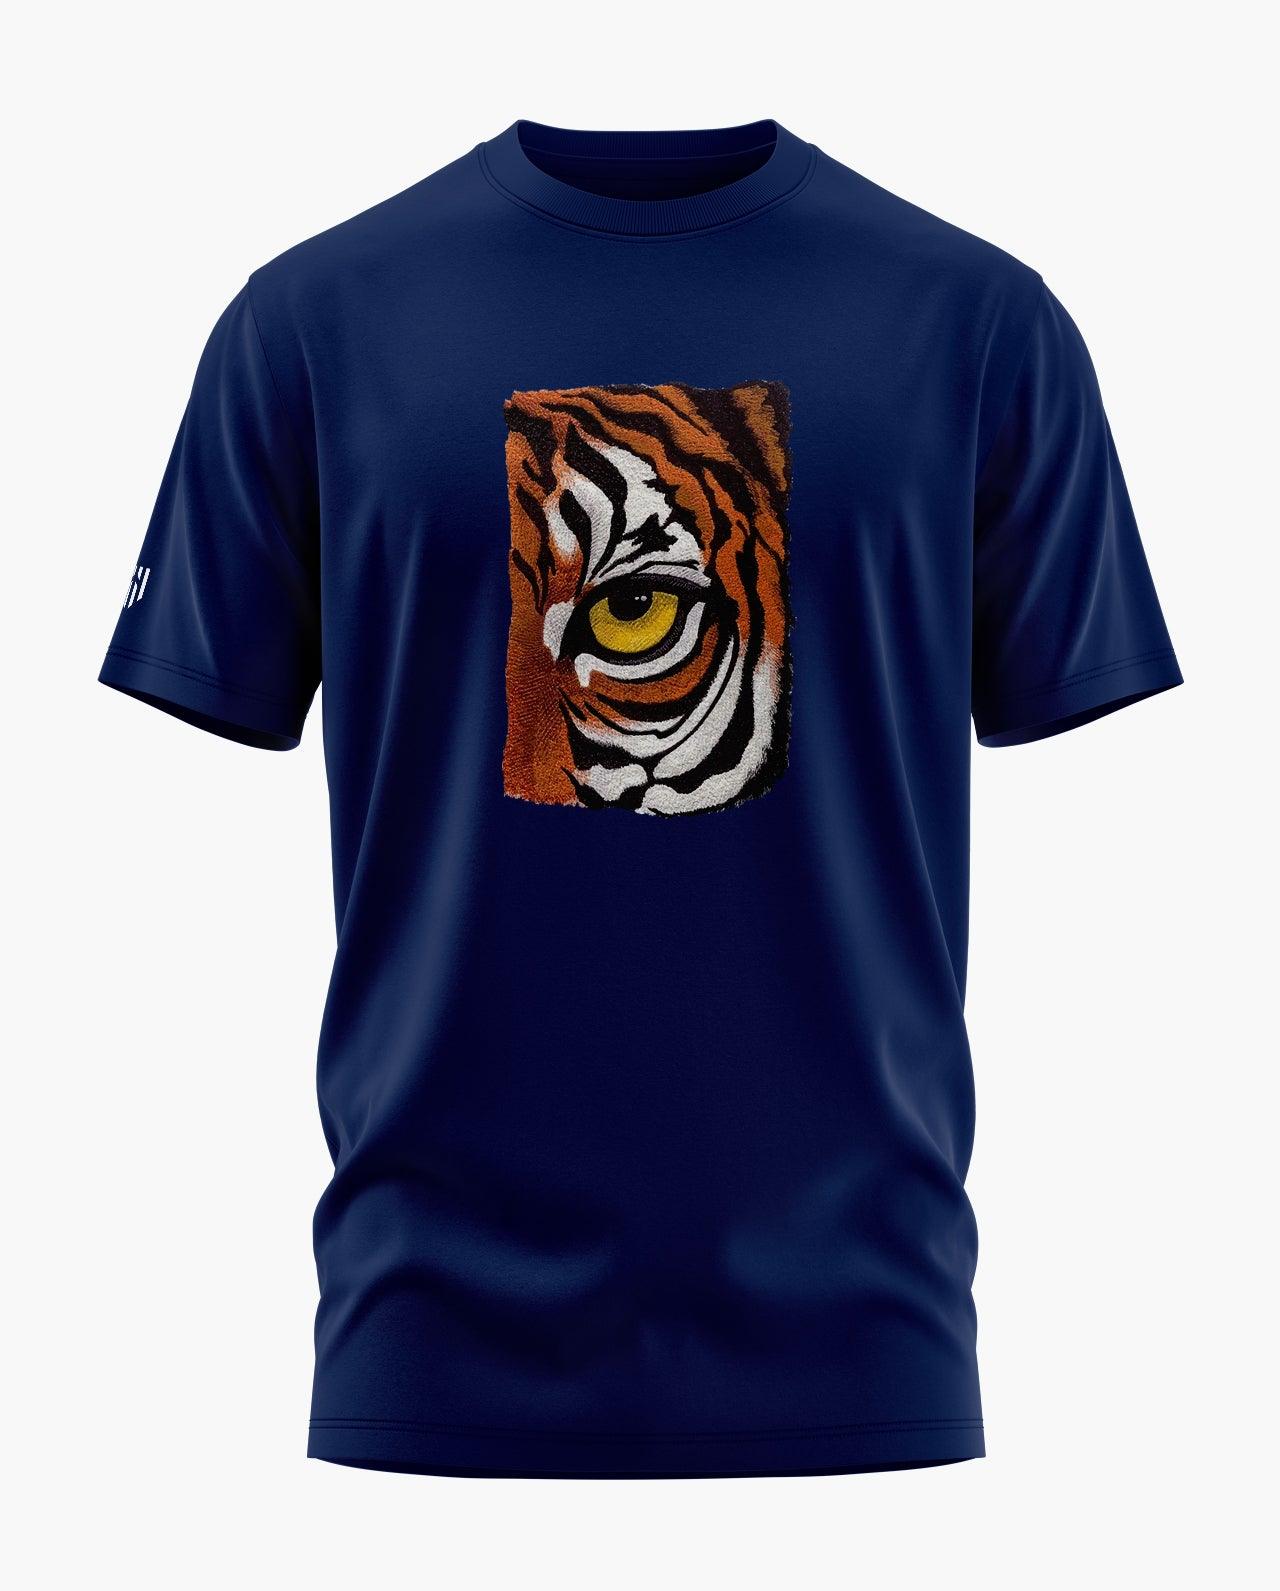 The Tiger's Eye T-Shirt - Aero Armour